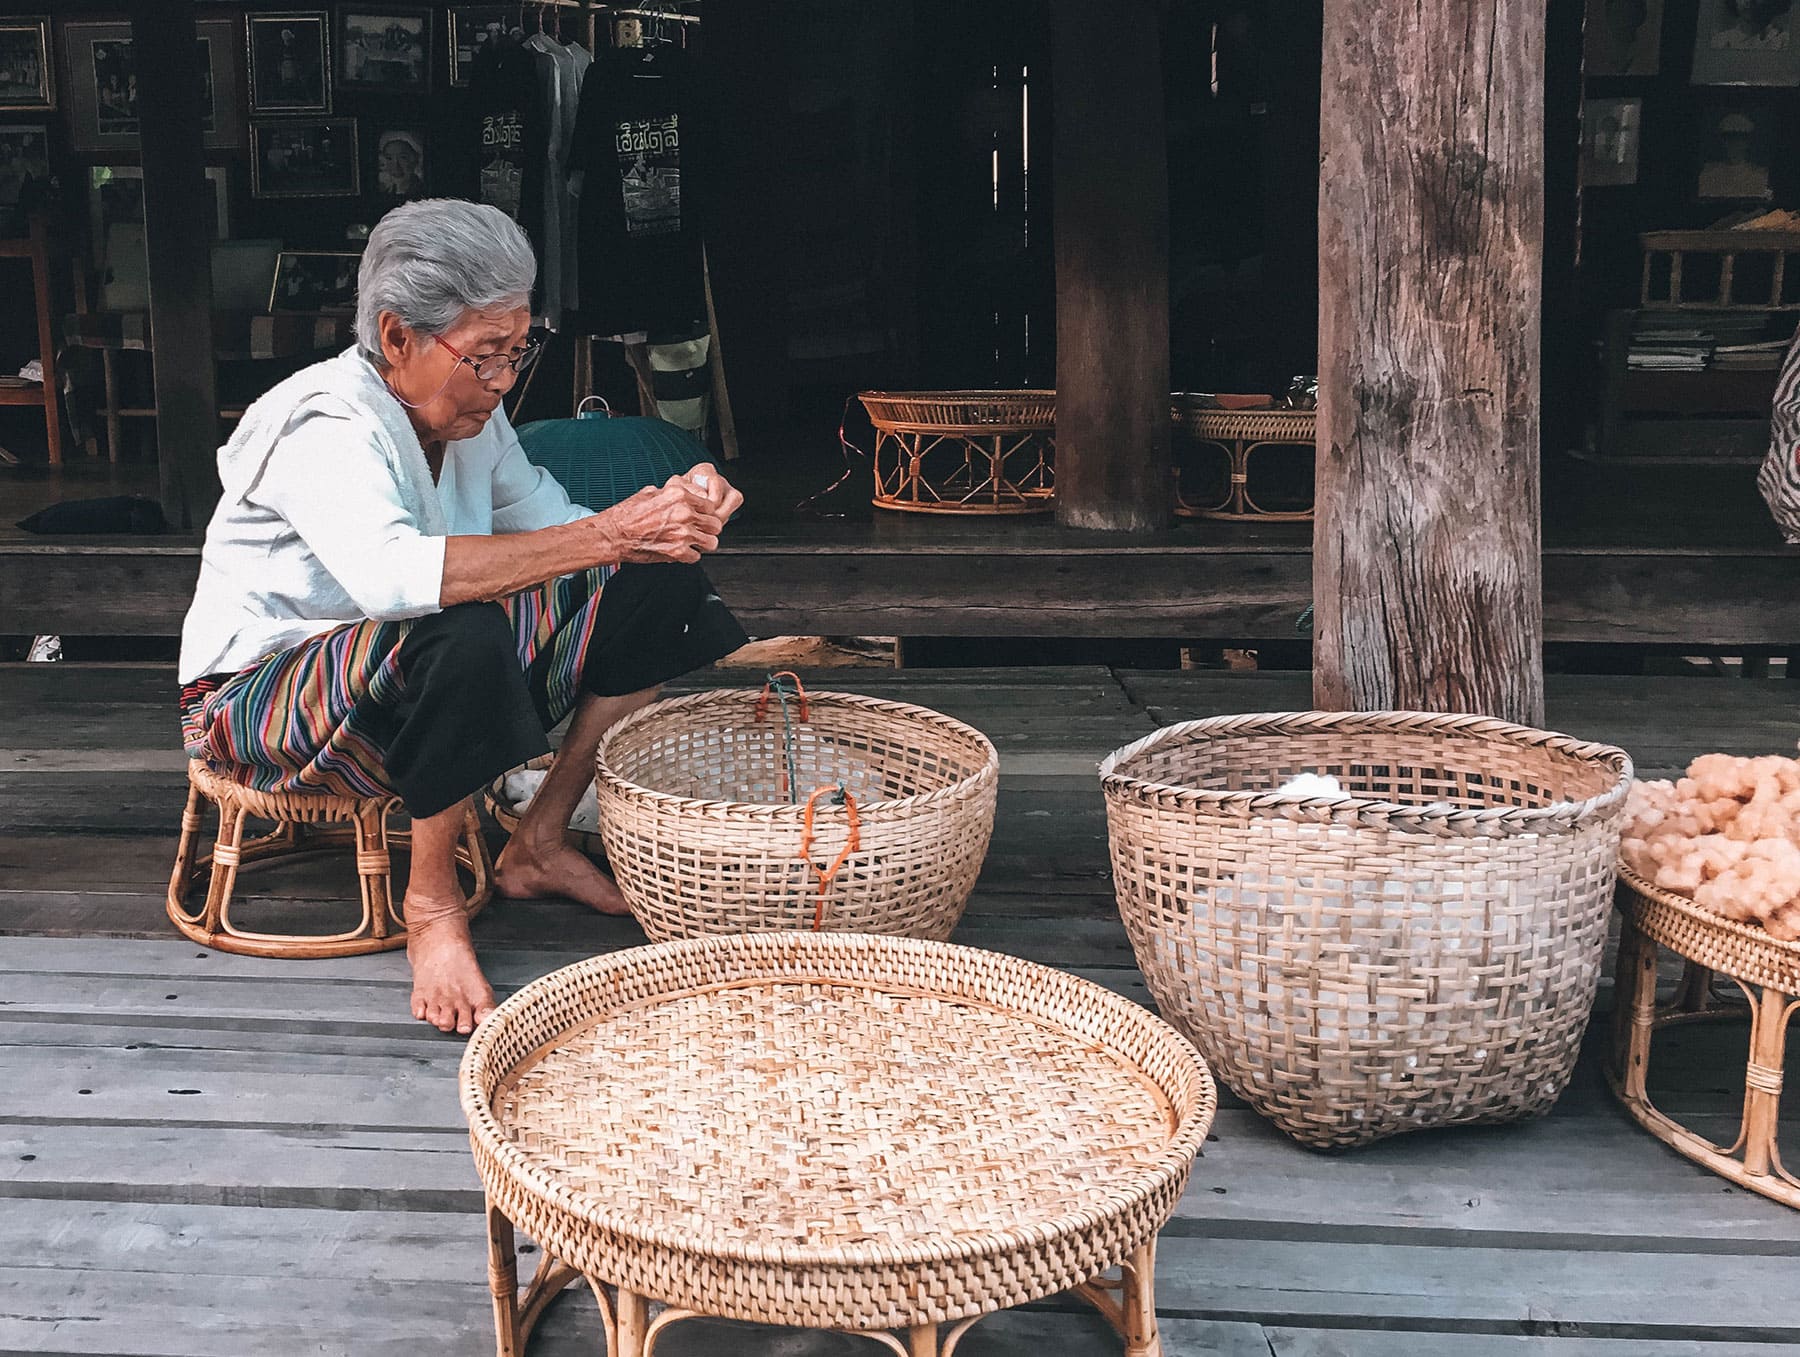 Rural northern Thailand | Sustainable tourism in Thailand